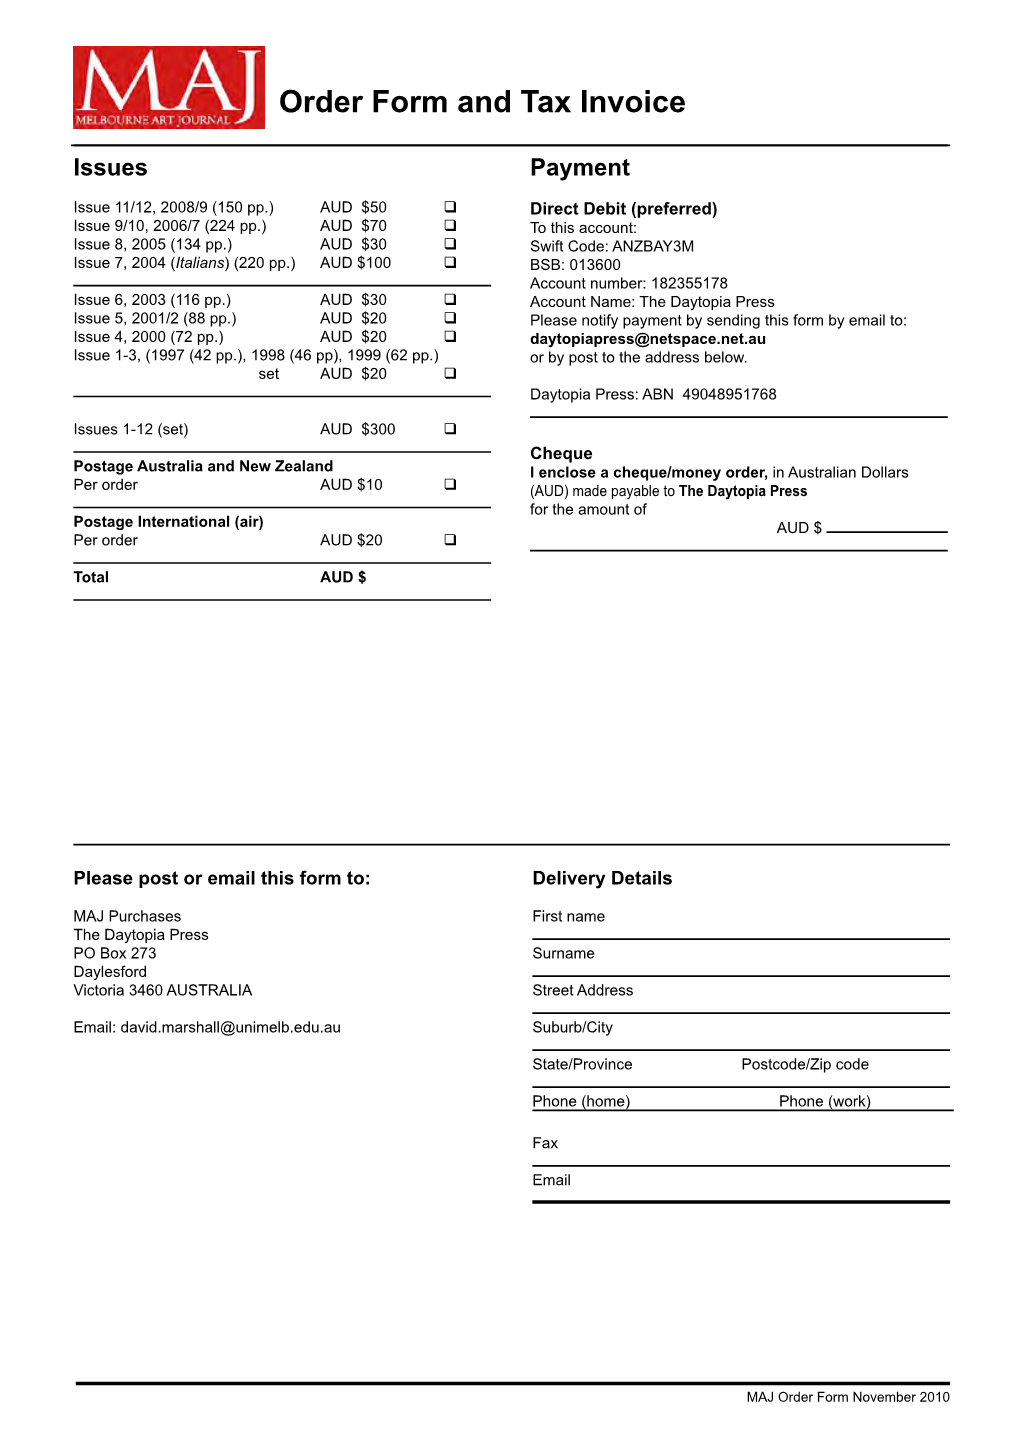 MAJ Order Form November 2010 Issues